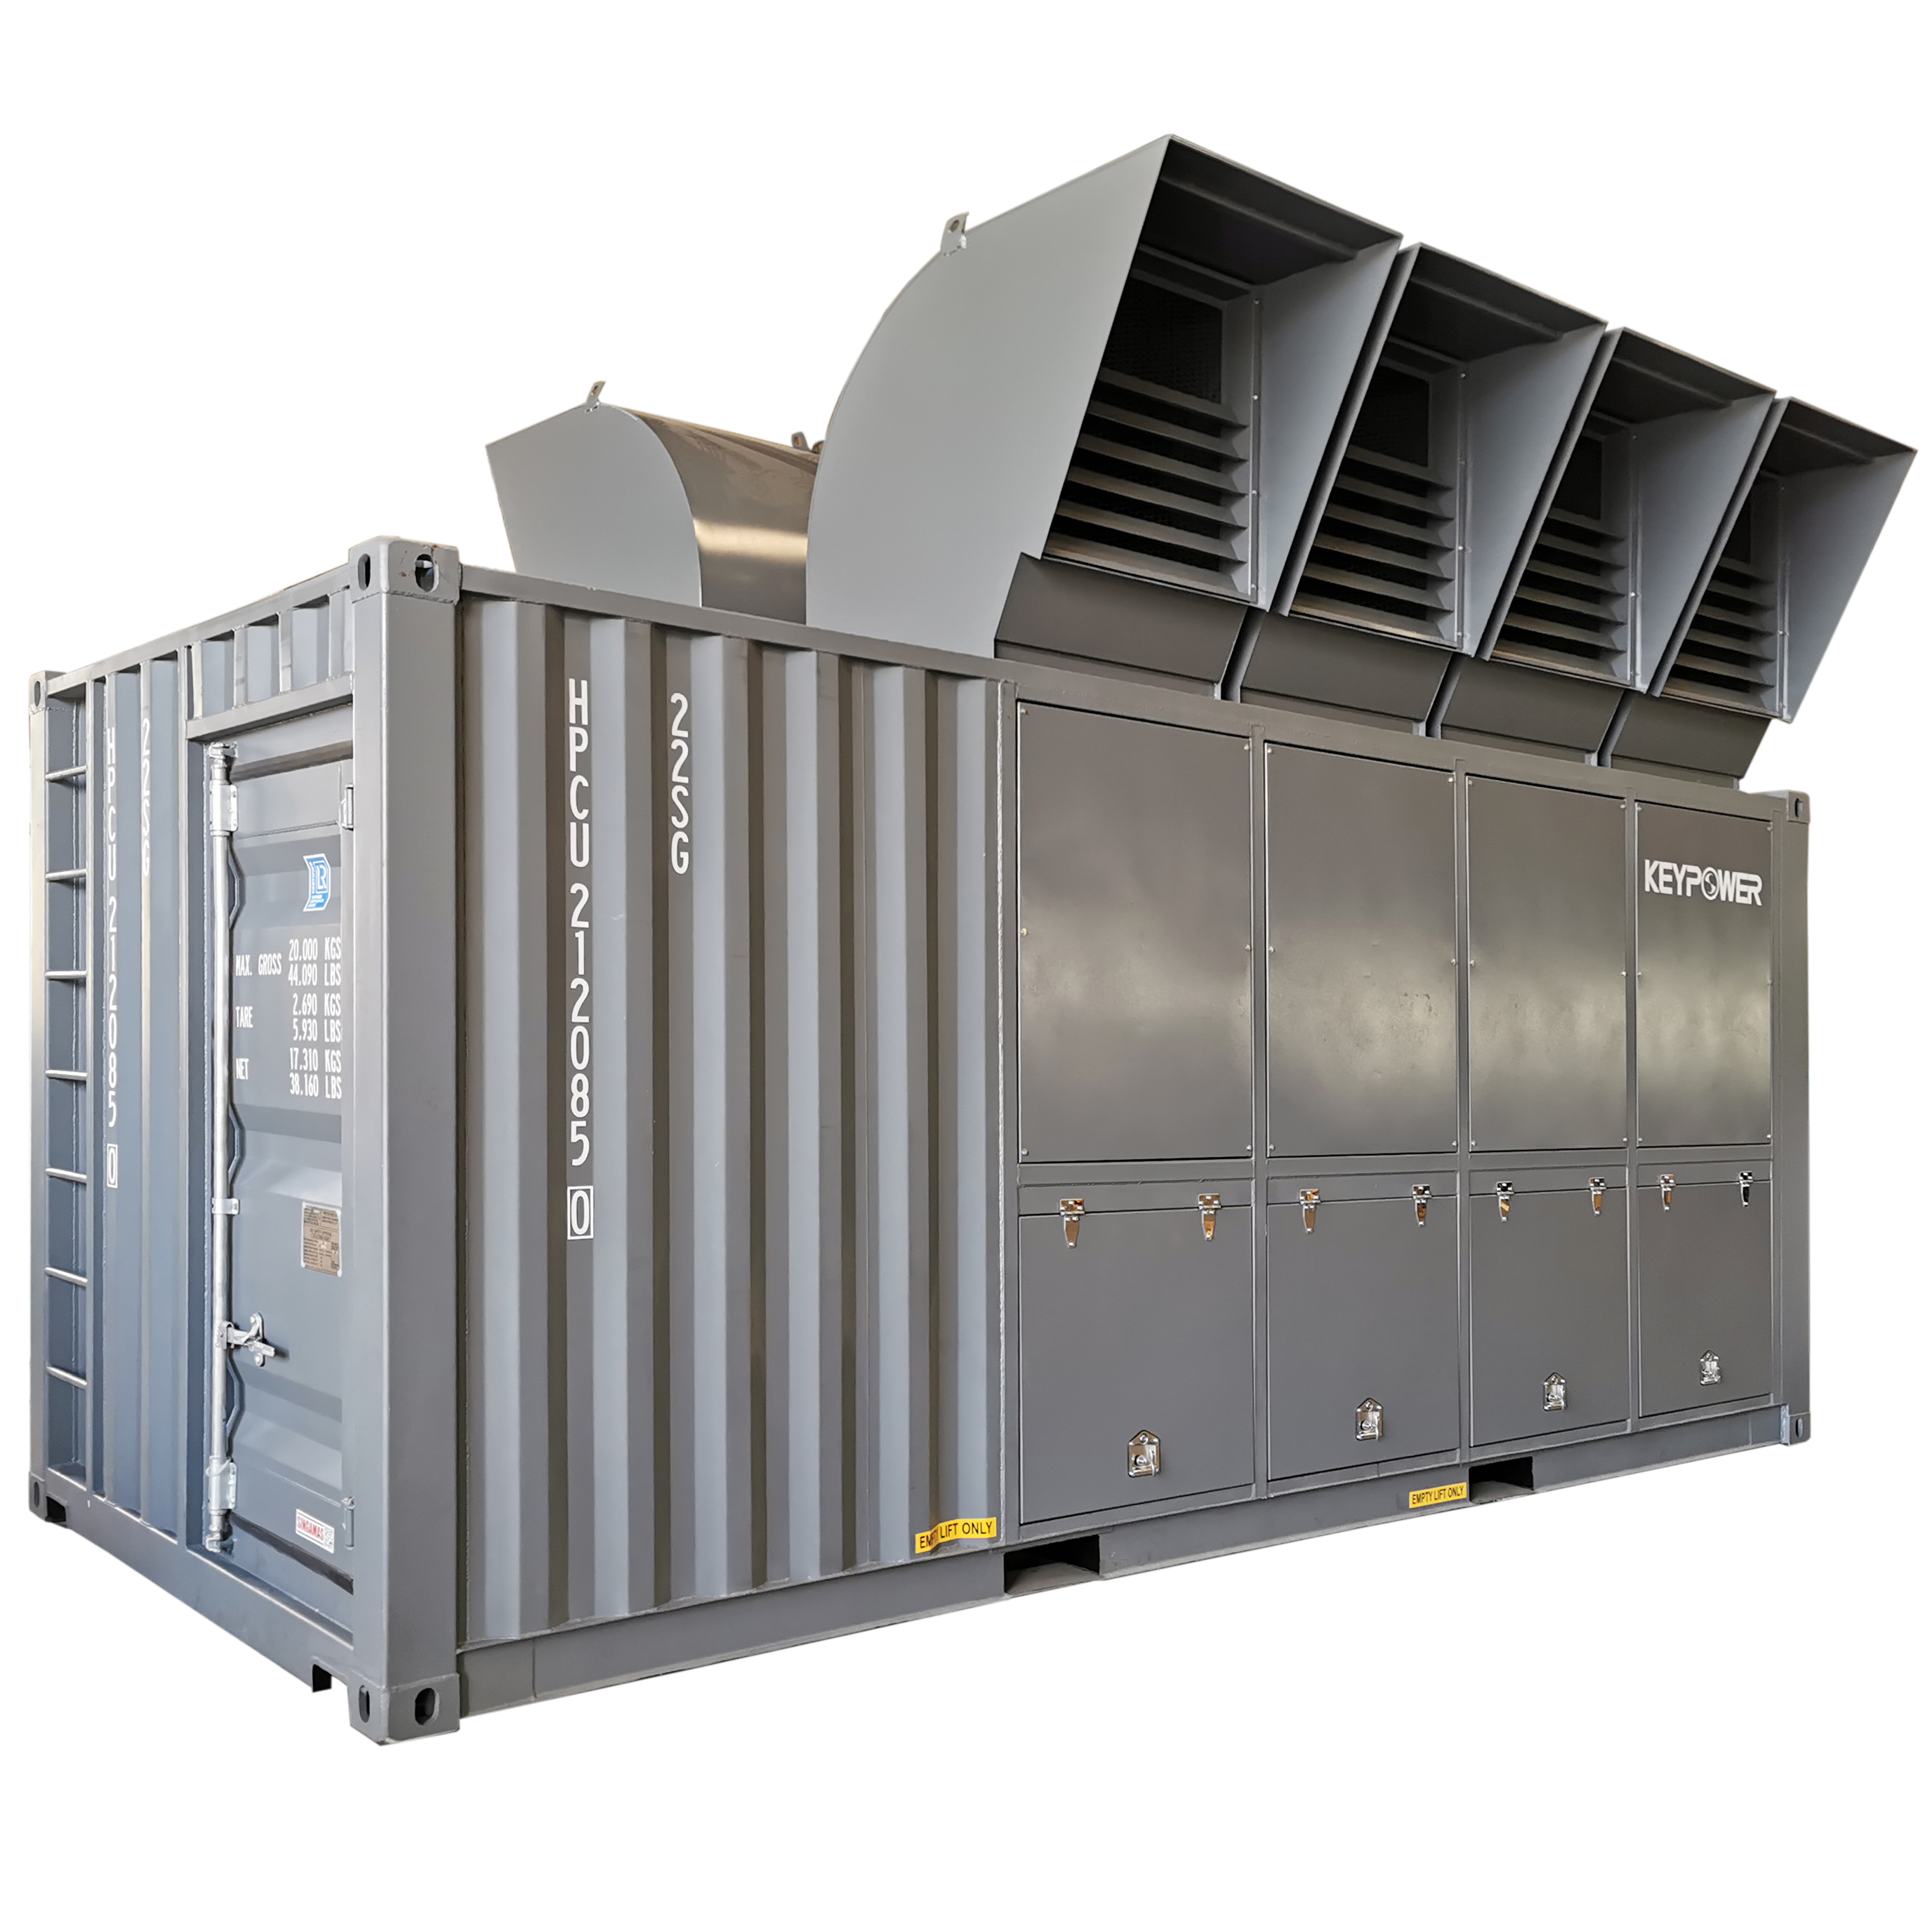 Wholesale Portable Resitive Load Banks - KEYPOWER 2400kW Resistive Load Bank For Generator Testing – Gff Keypower